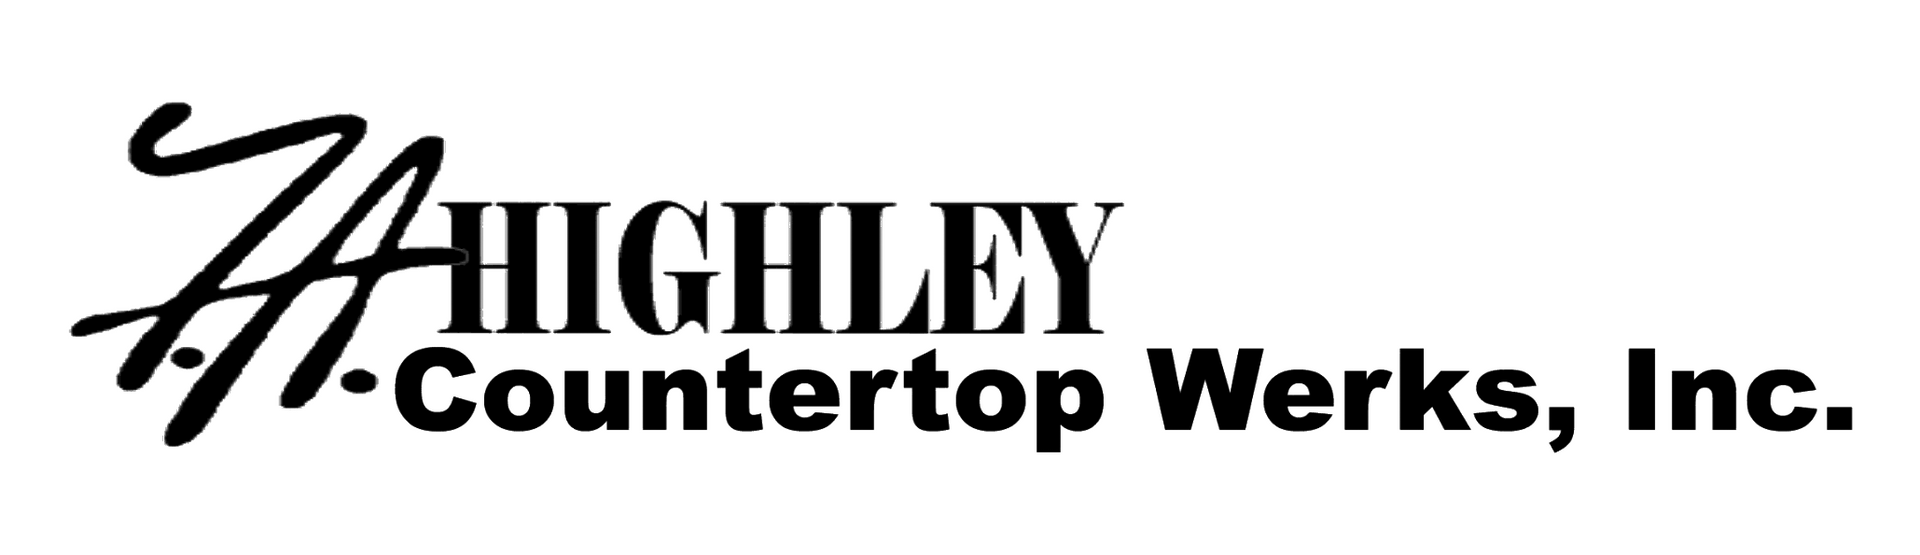 f-a-highley-co-countertop-werks-logo